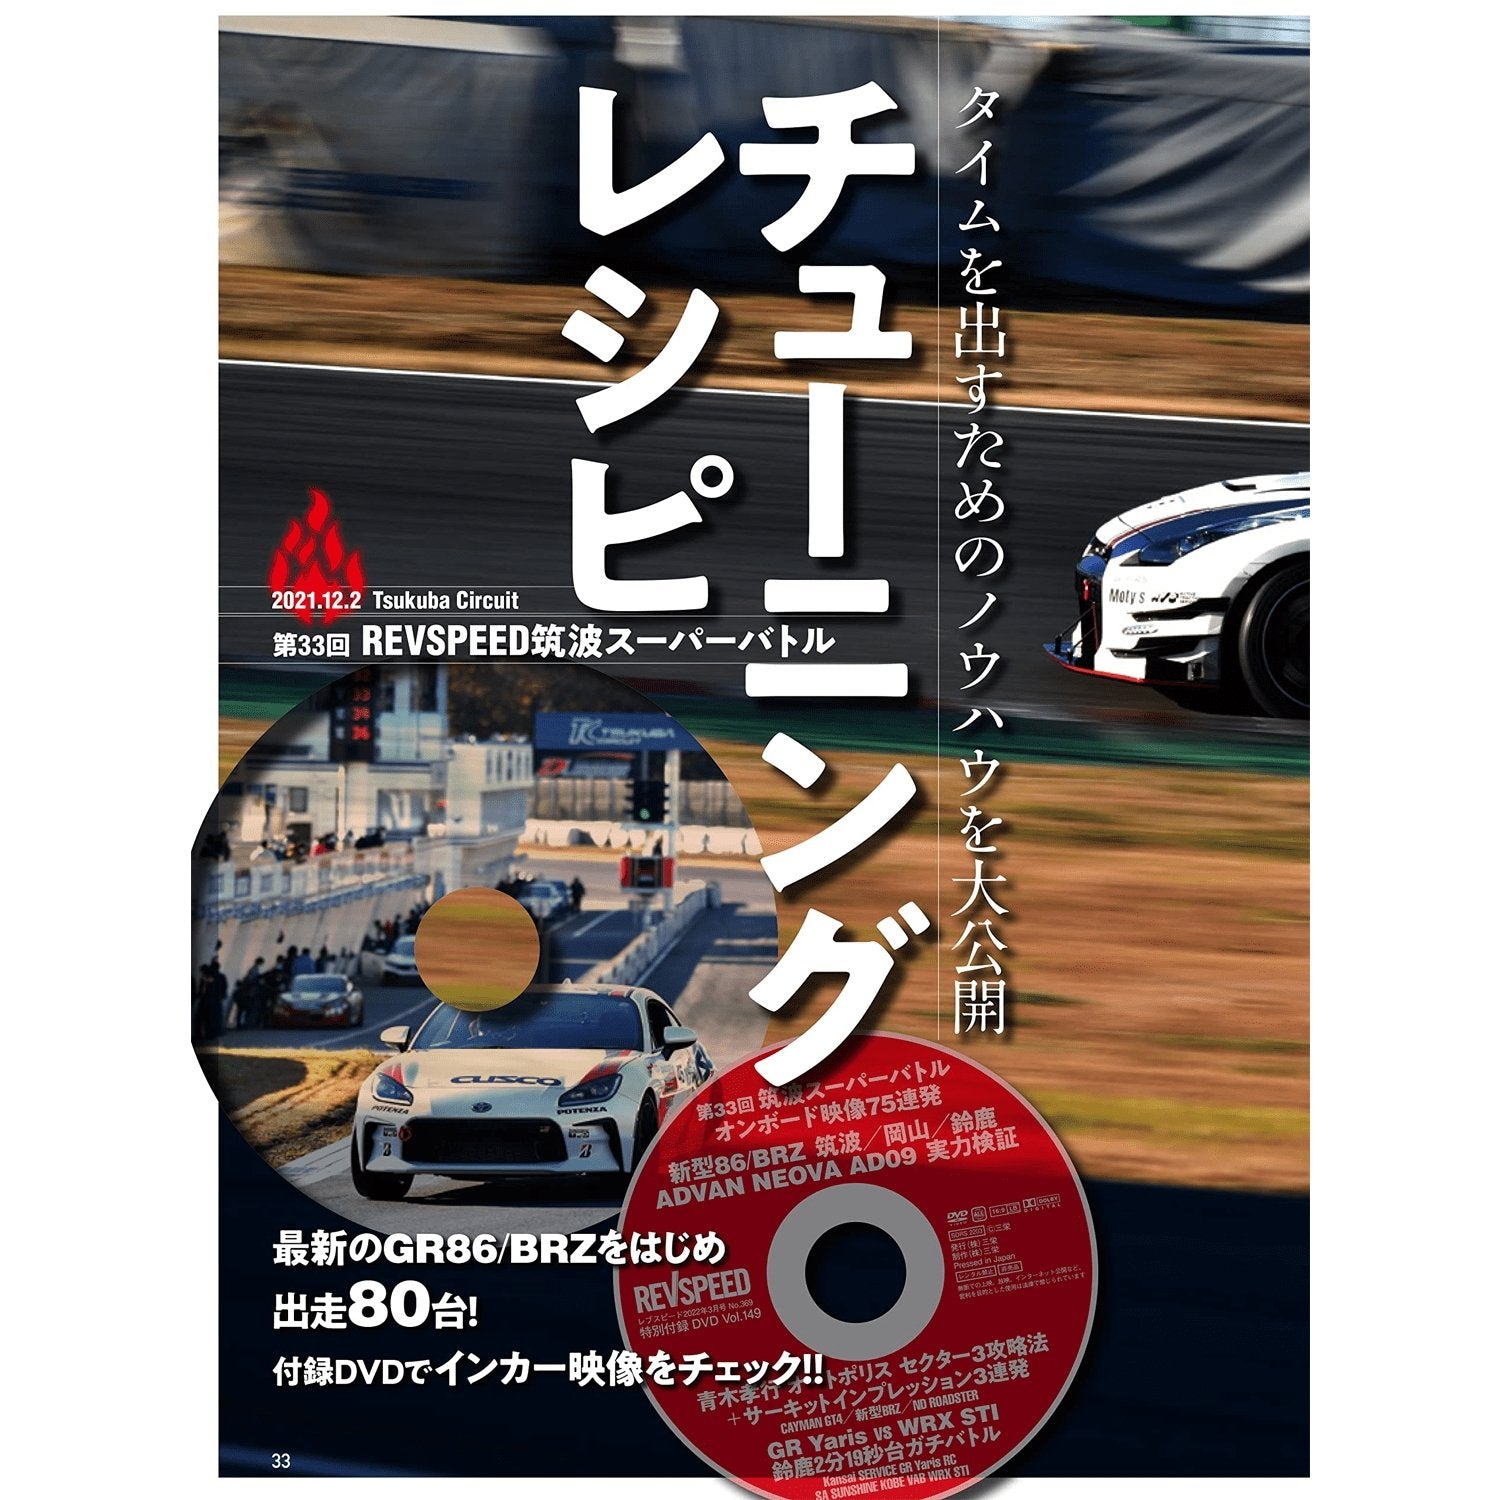 REVSPEED JDM Japanese Magazine Special Issue + Bonus DVD March 